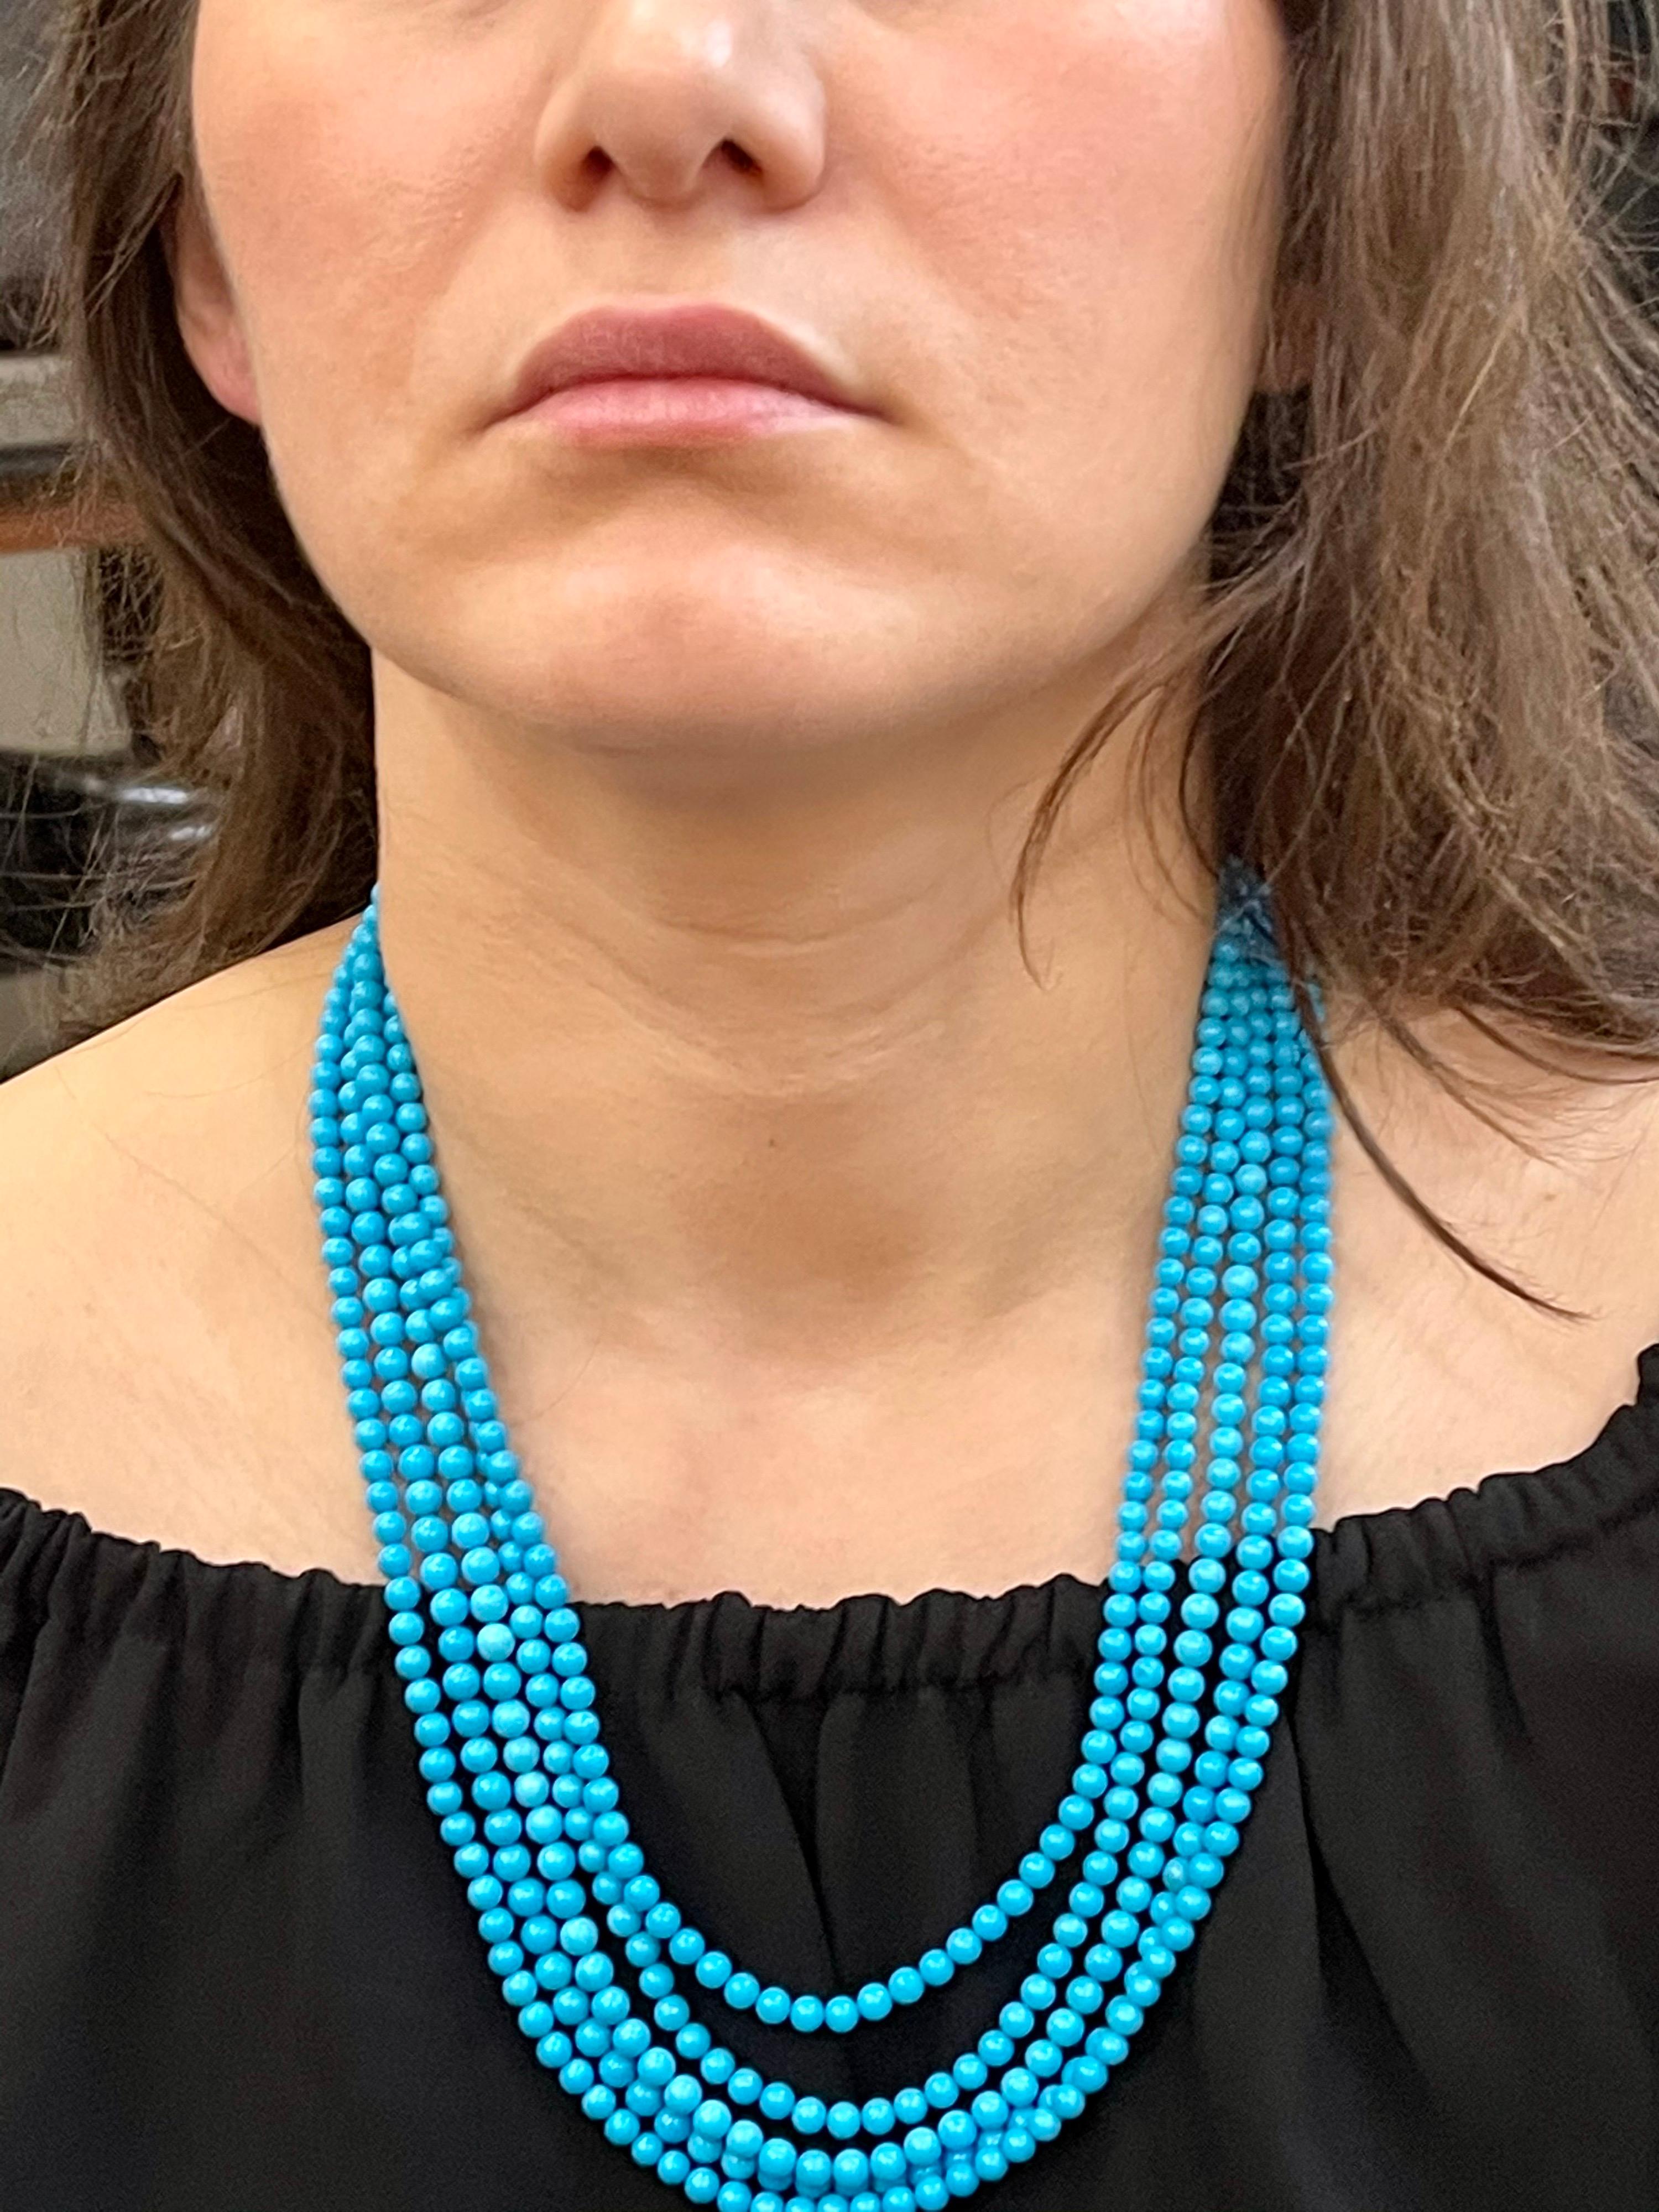 465 Carat Natural Sleeping Beauty Turquoise Necklace, Multi Strand 18 Karat Gold 4